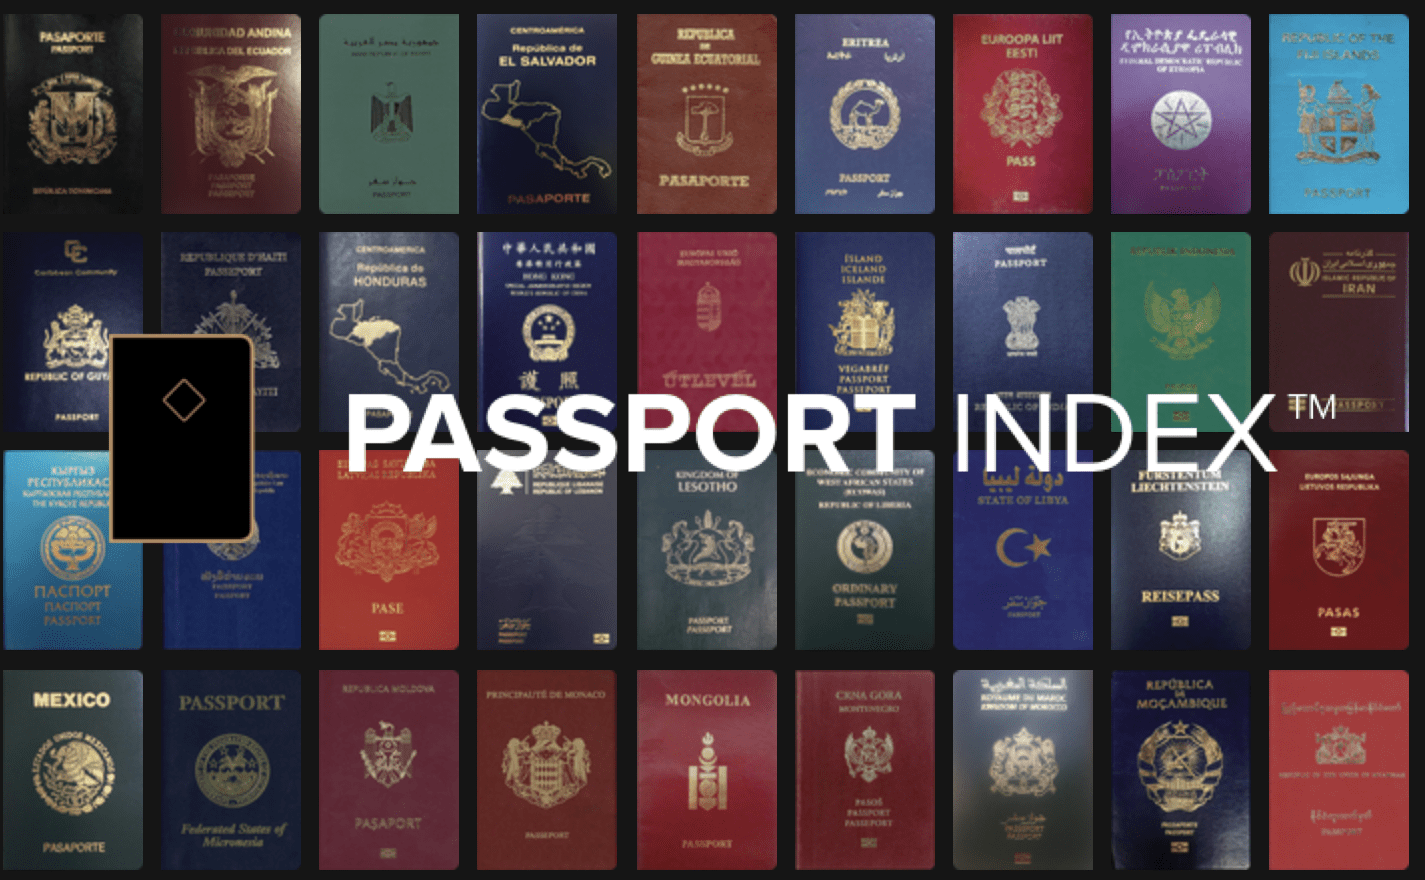 20 06 12 - Bang xep hang quyen luc ho chieu - Passport Ranking - Passportindex.org